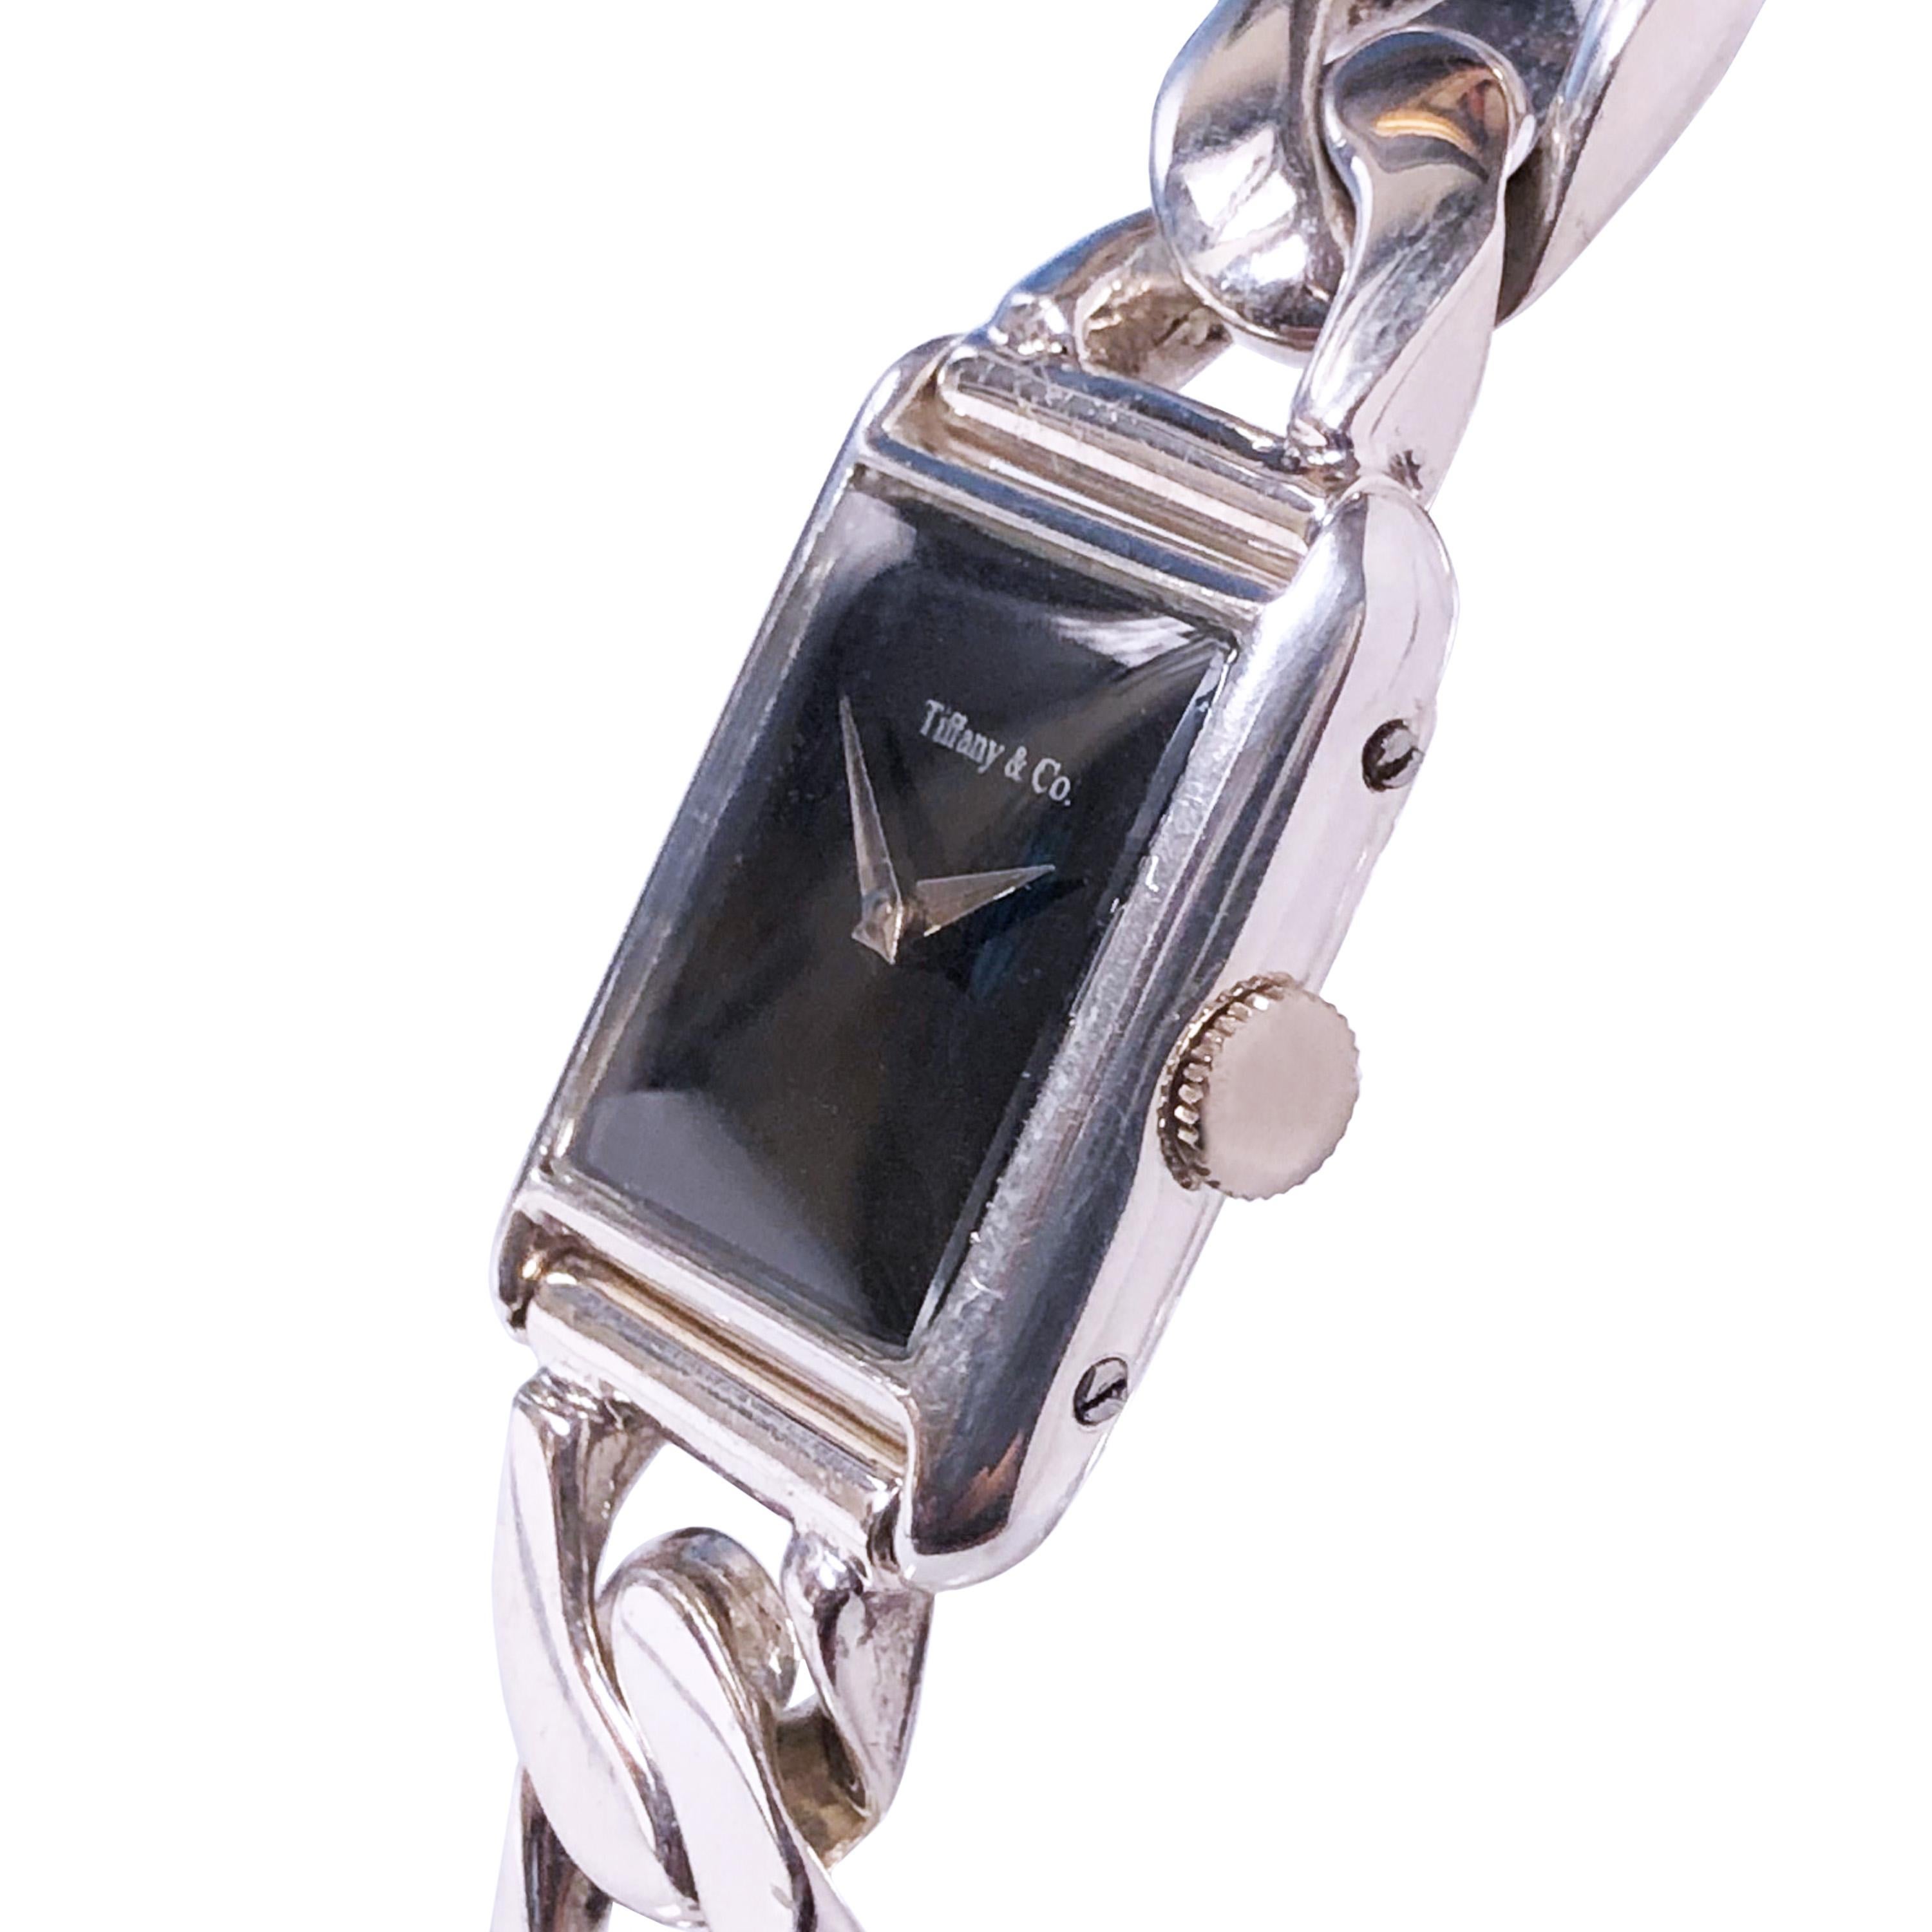 Circa 1980 Tiffany & Company Bracelet Wrist Watch. 27 X 20 MM Sterling Silver 2 piece Case. Mechanical, Manual Wind Movement. Black Dial. 1/2 inch wide Sterling Silver Bracelet, case back stamped 